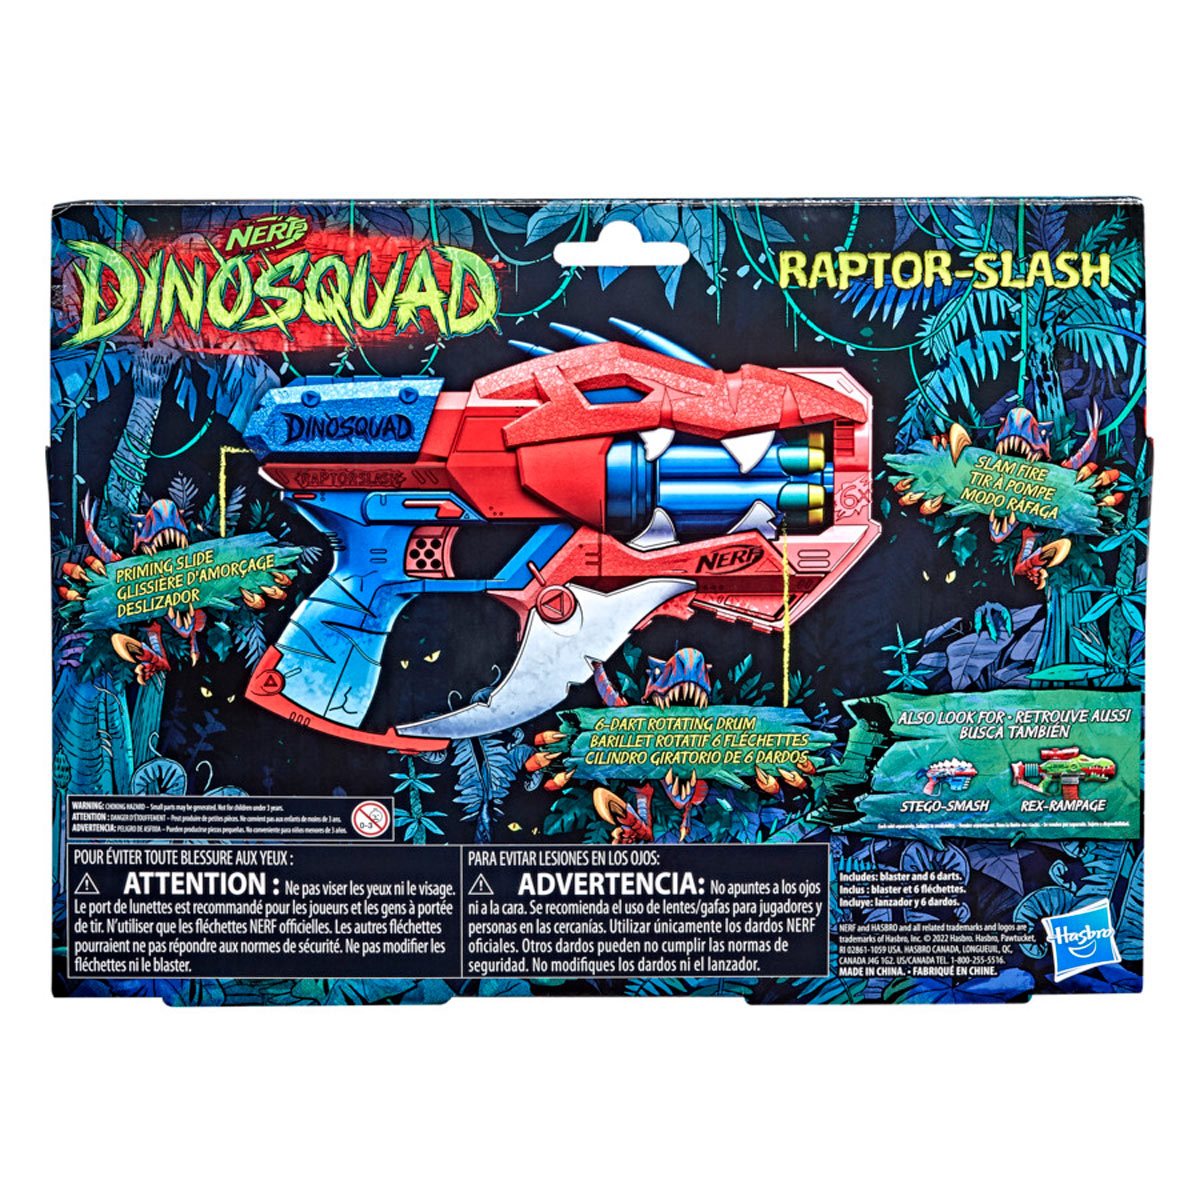 Nerf DinoSquad Raptor-Slash Dart Blaster - Entertainment Earth